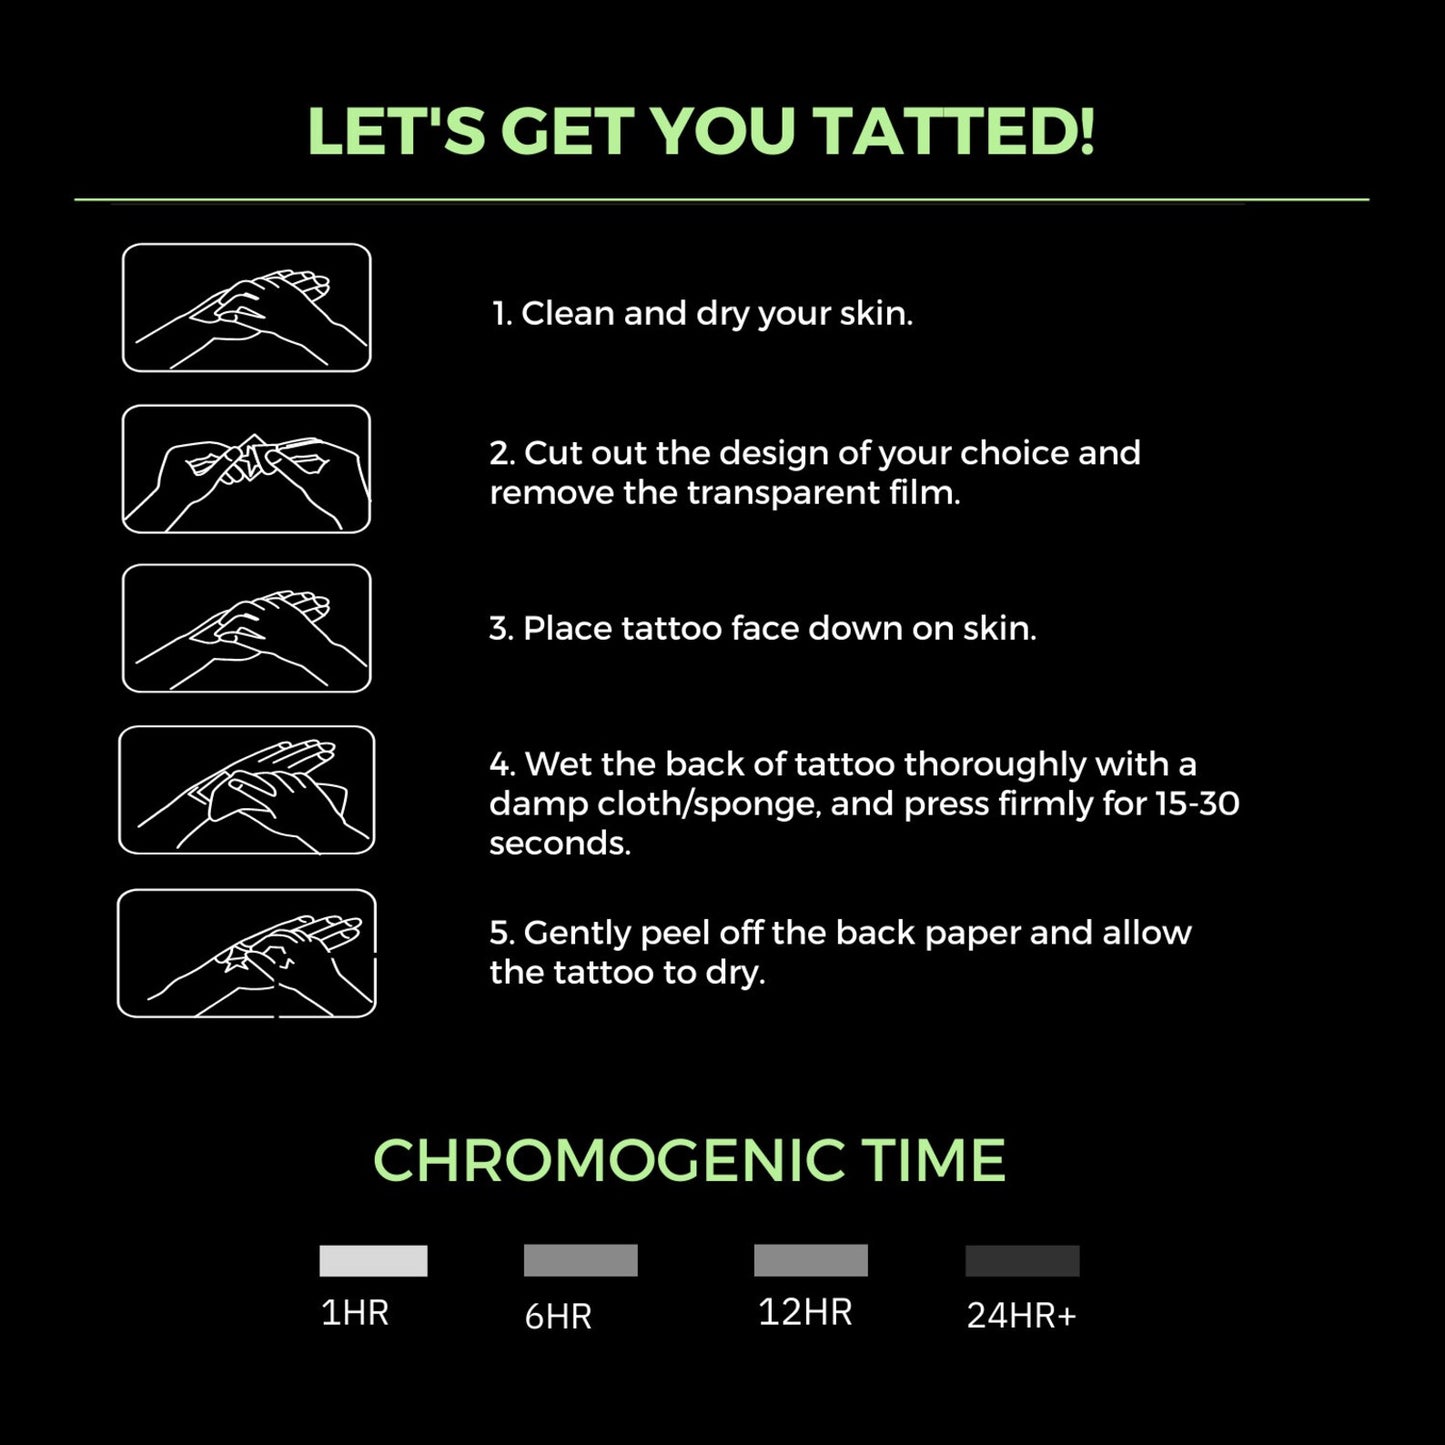 Eye of Horus Tattoo | 2 Week Temporary Tattoo | Plant Based Vegan Tattoo | Boho Tattoo | Festival Tattoo | Spiritual Tattoo | Eye Tattoo | Third Eye Tattoo | Egyptian Tattoo